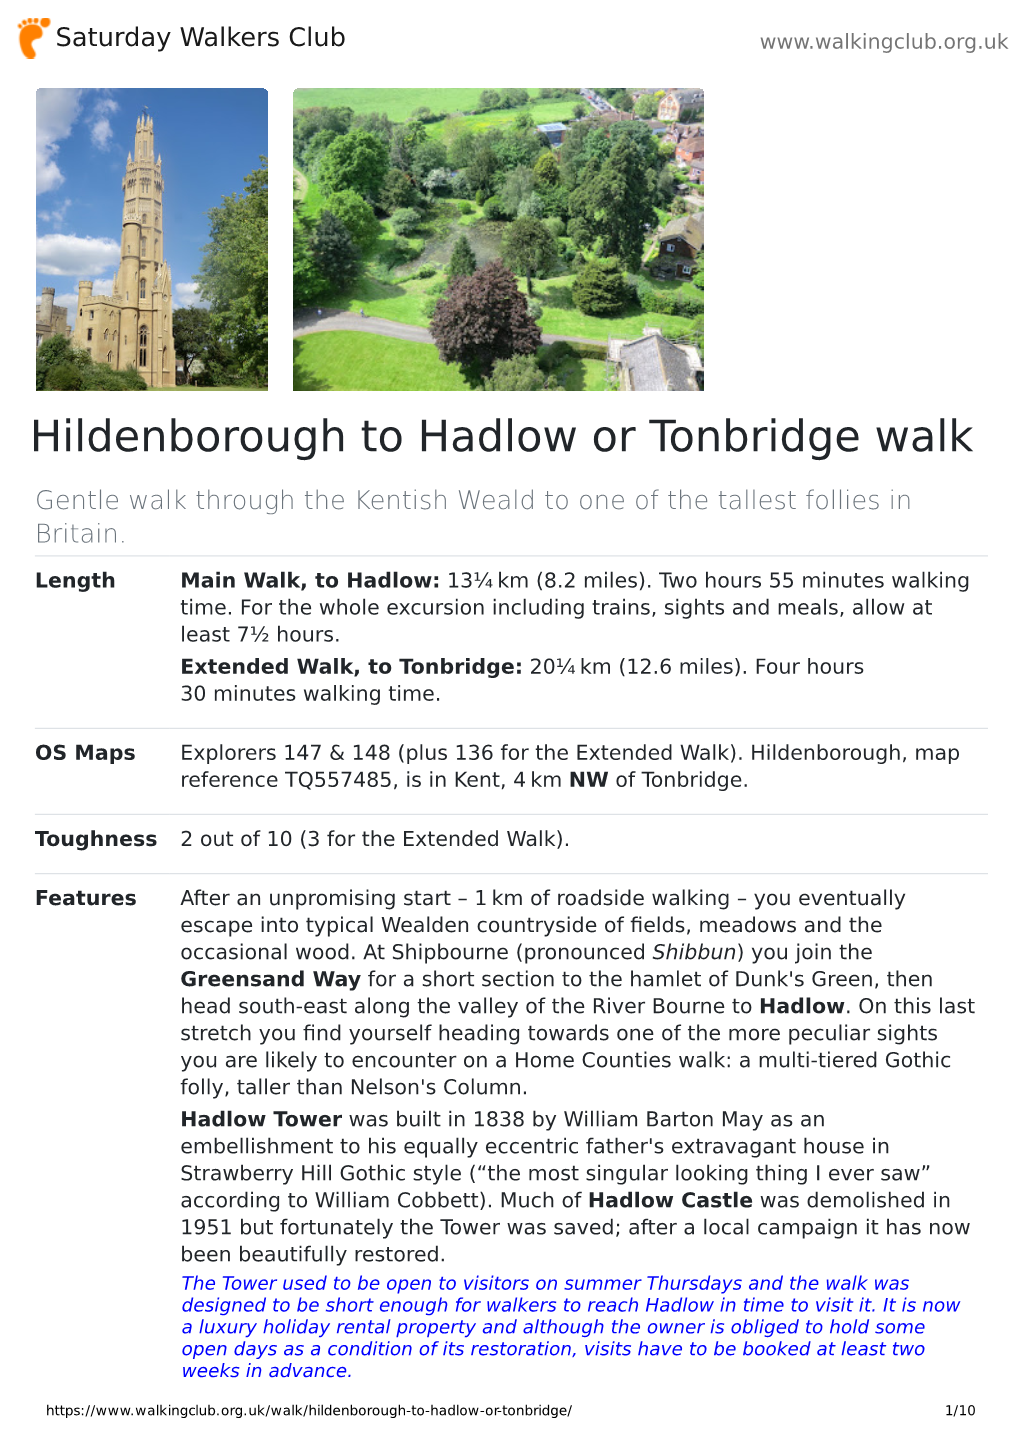 Hildenborough to Hadlow Or Tonbridge Walk